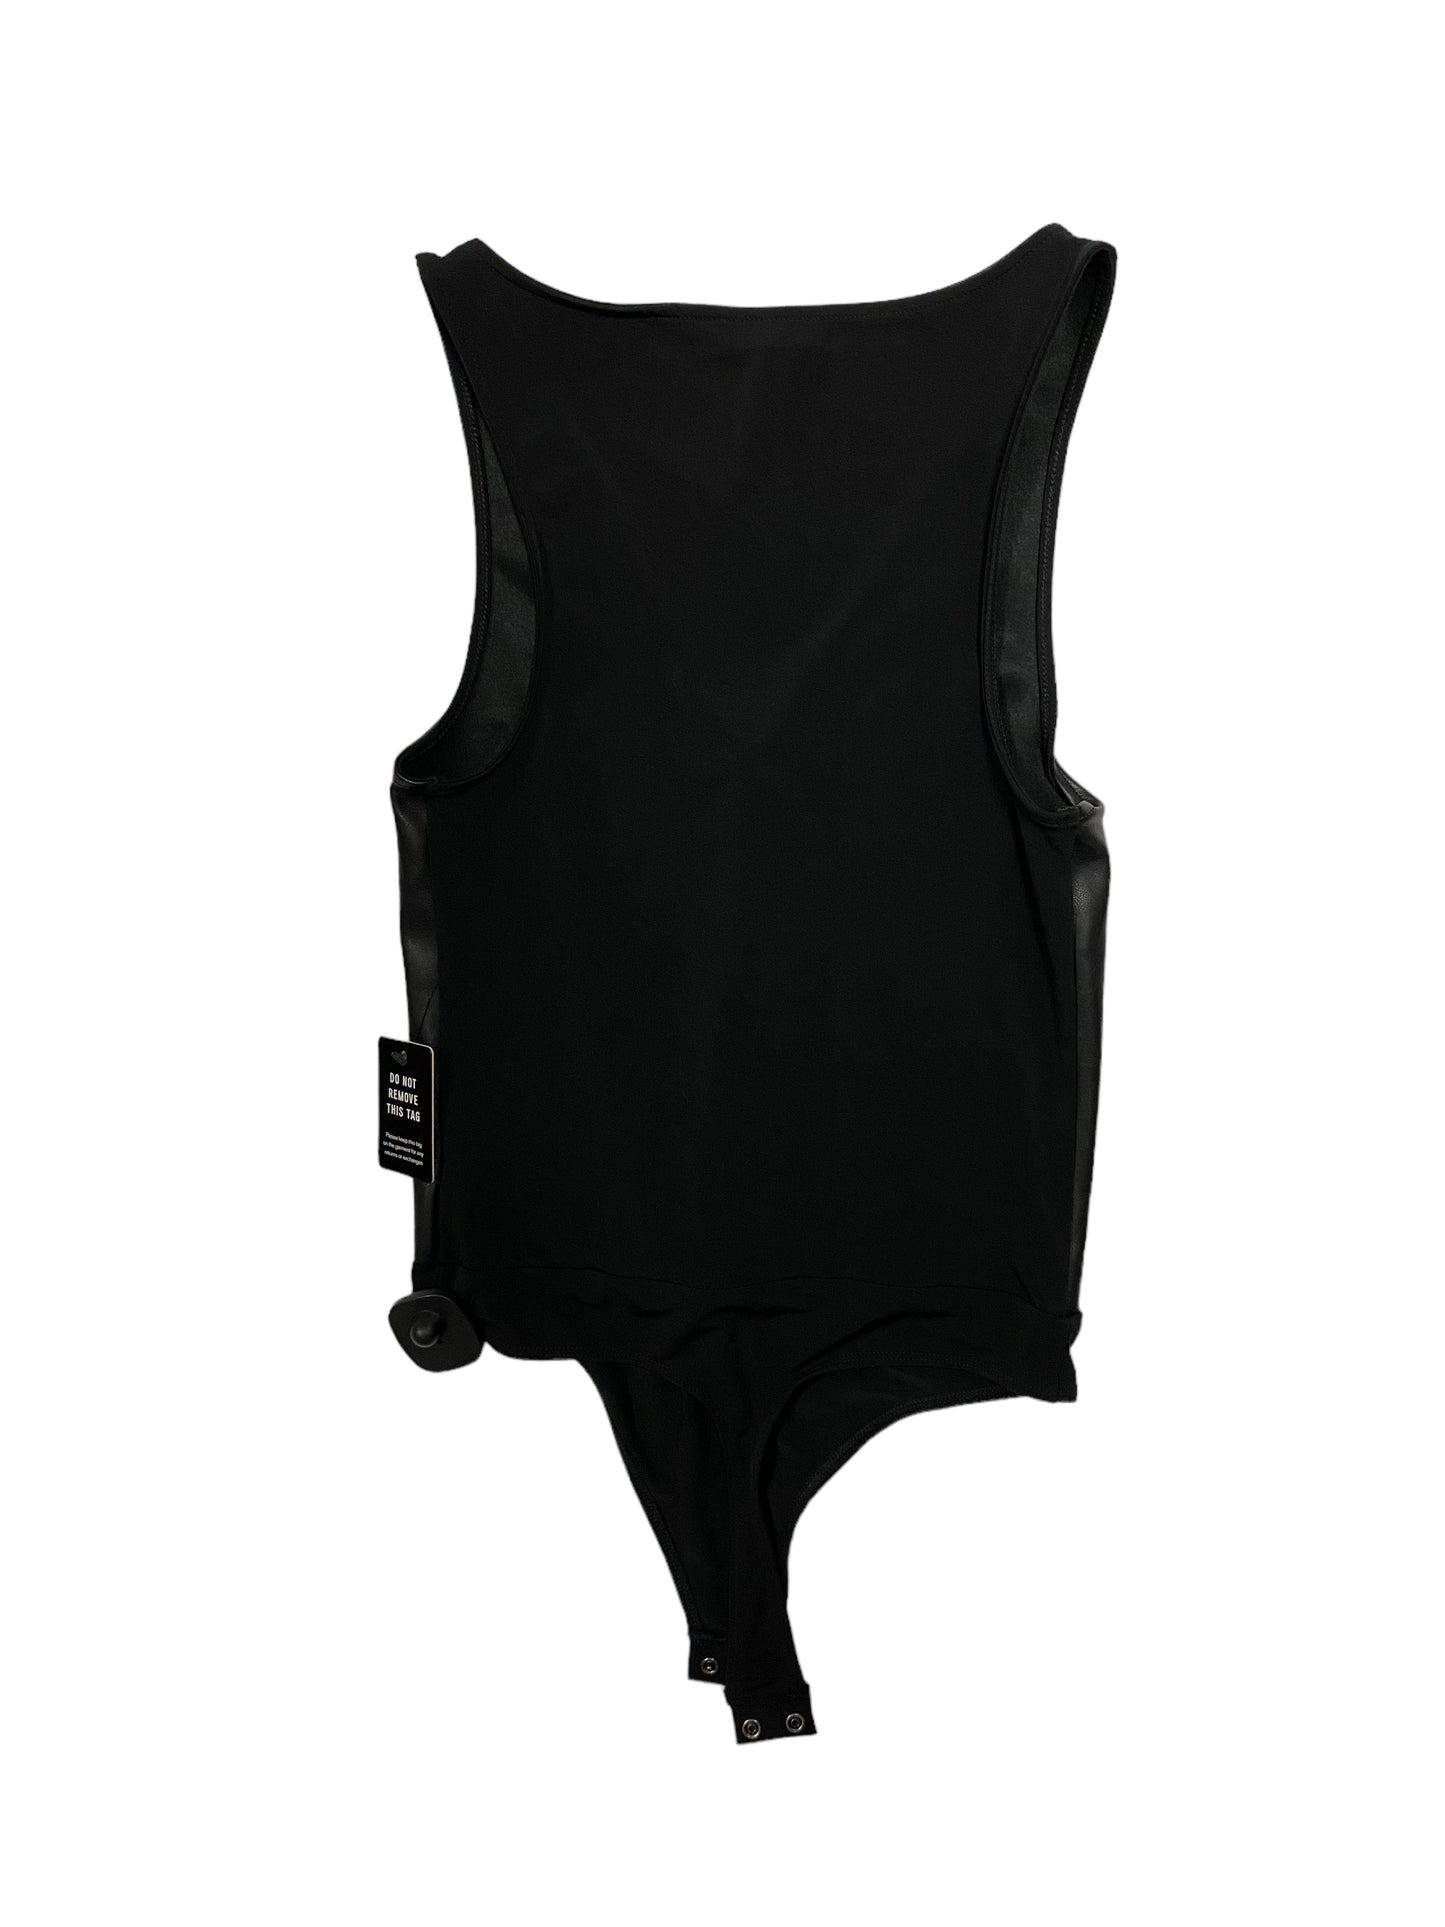 Black Bodysuit Express, Size S